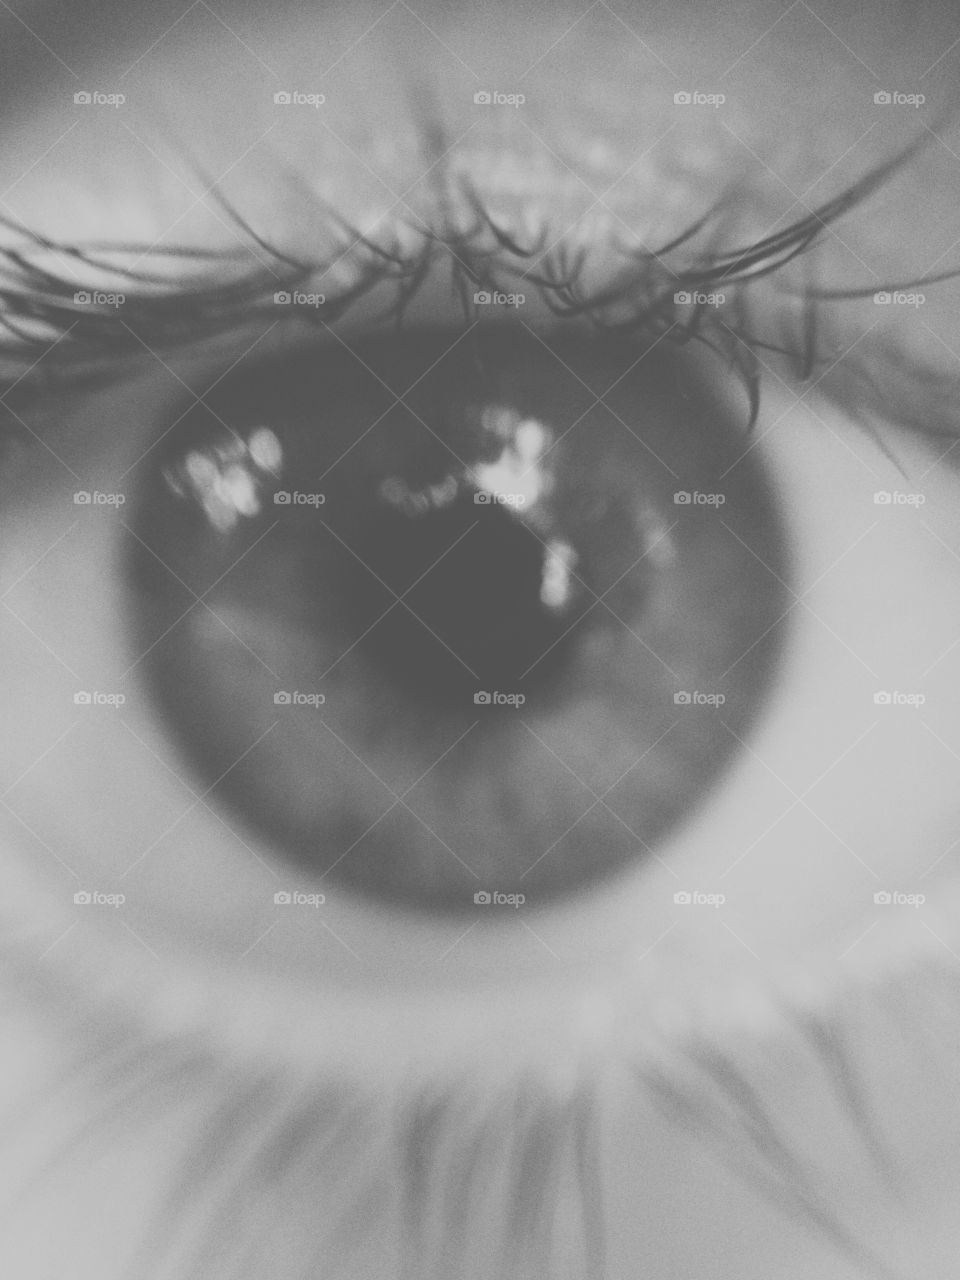 Retina. The beauiful eye of my girlfriend.